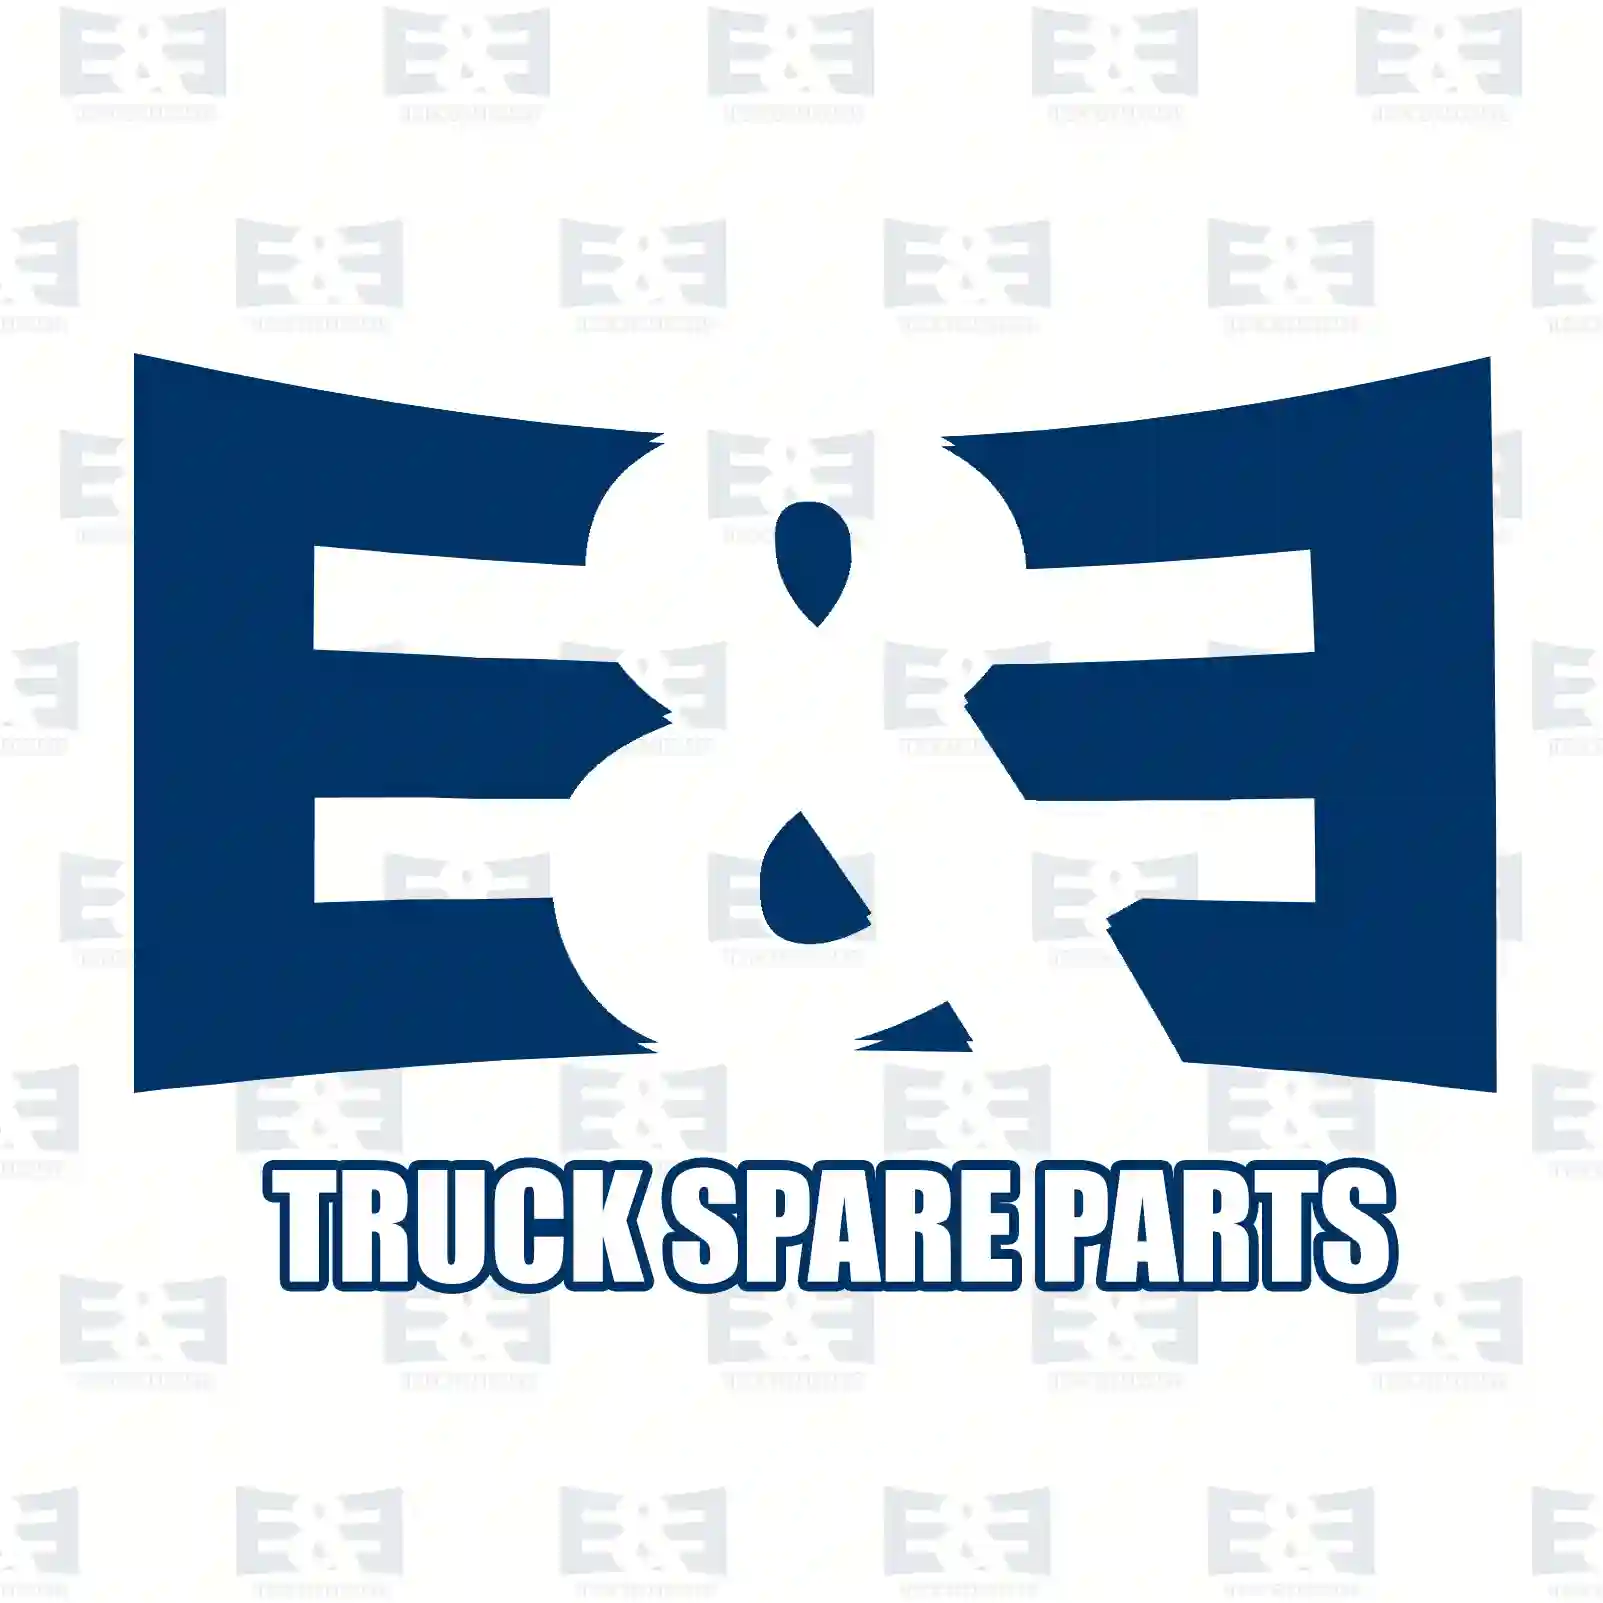 Ball bearing, 2E2285651, 0697888, 697888, 1101171, 1698671 ||  2E2285651 E&E Truck Spare Parts | Truck Spare Parts, Auotomotive Spare Parts Ball bearing, 2E2285651, 0697888, 697888, 1101171, 1698671 ||  2E2285651 E&E Truck Spare Parts | Truck Spare Parts, Auotomotive Spare Parts